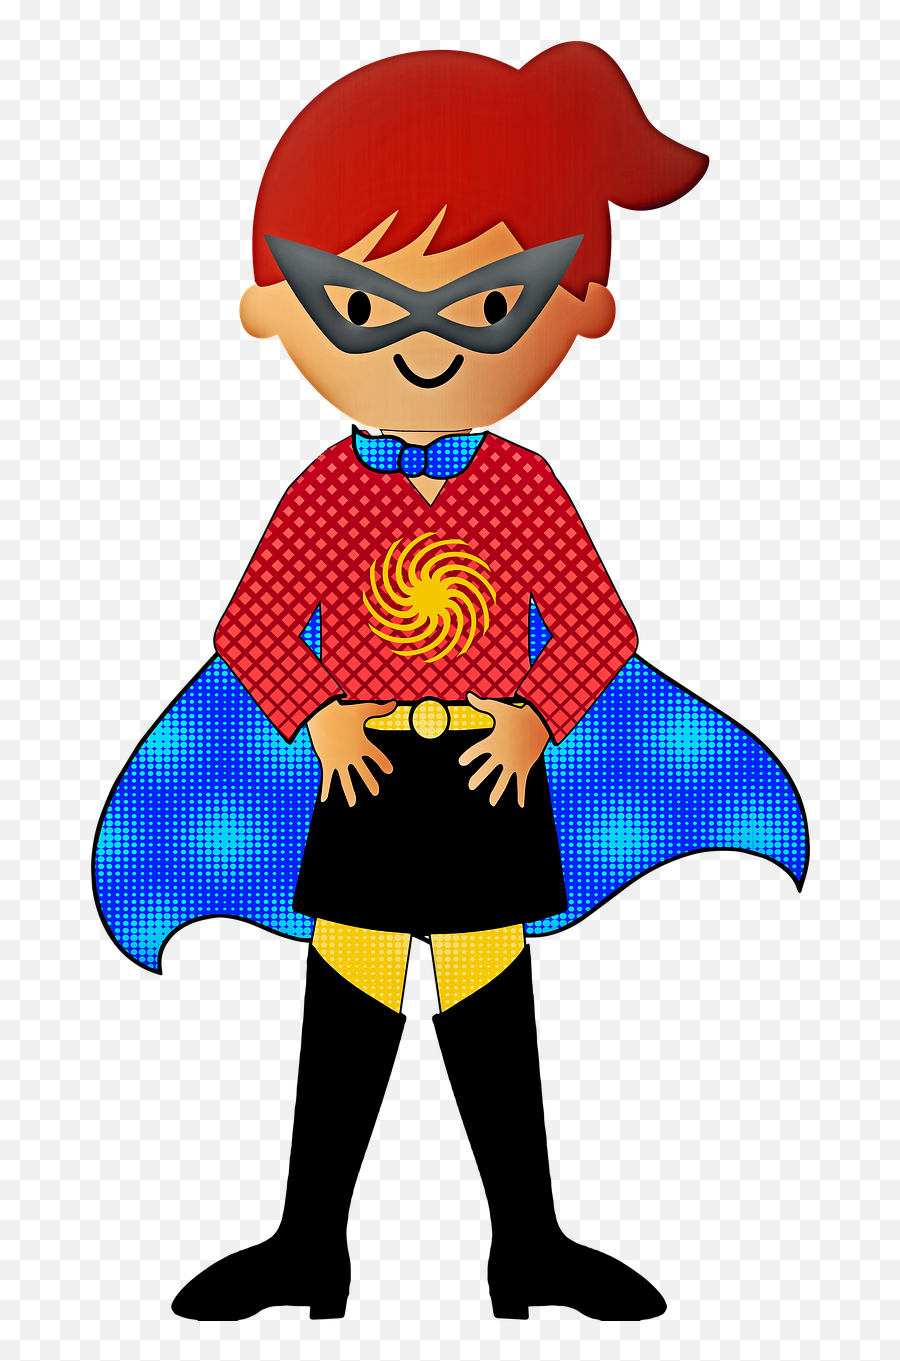 Superhero Girl Zap - Free Image On Pixabay Superhero Png,Super Girl Png